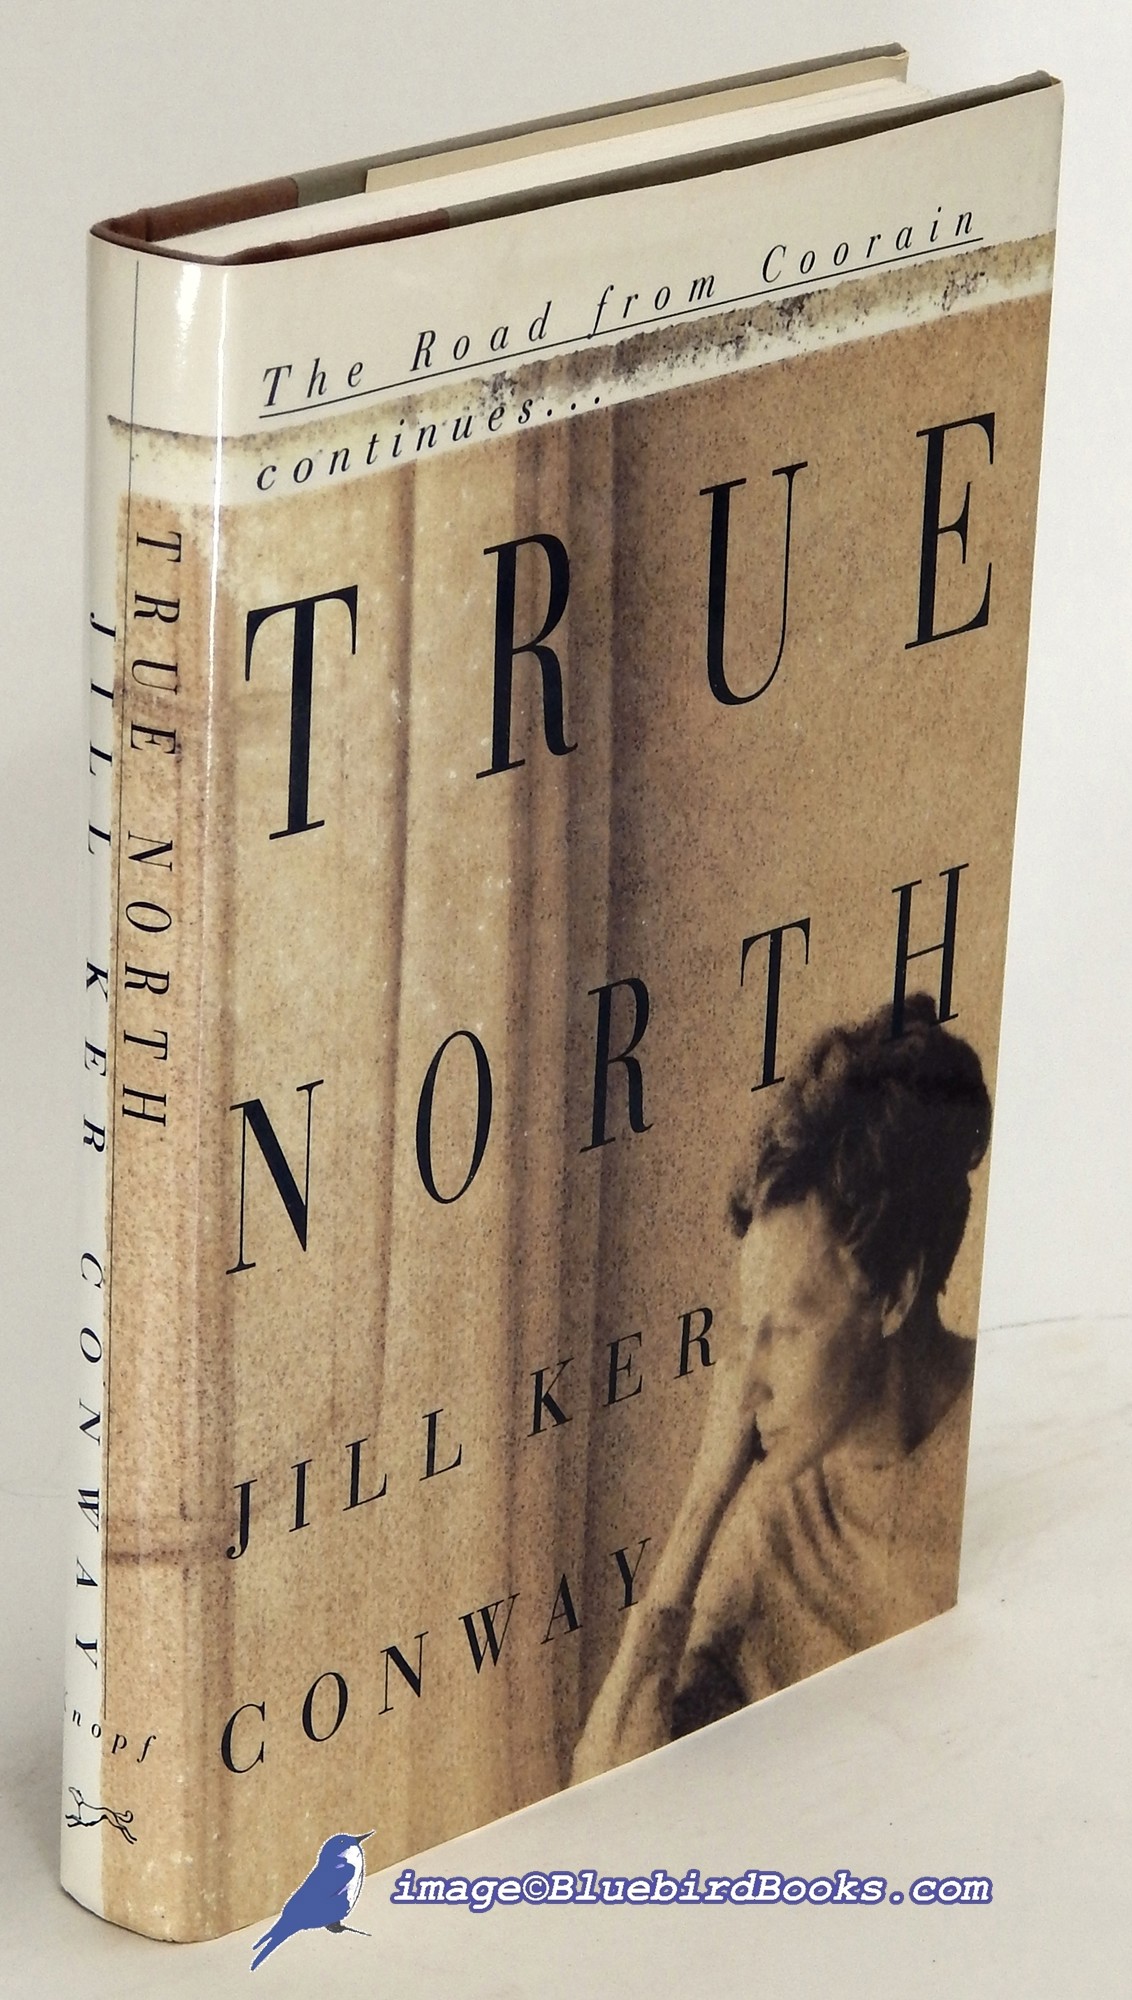 CONWAY, JILL KER - True North: A Memoir